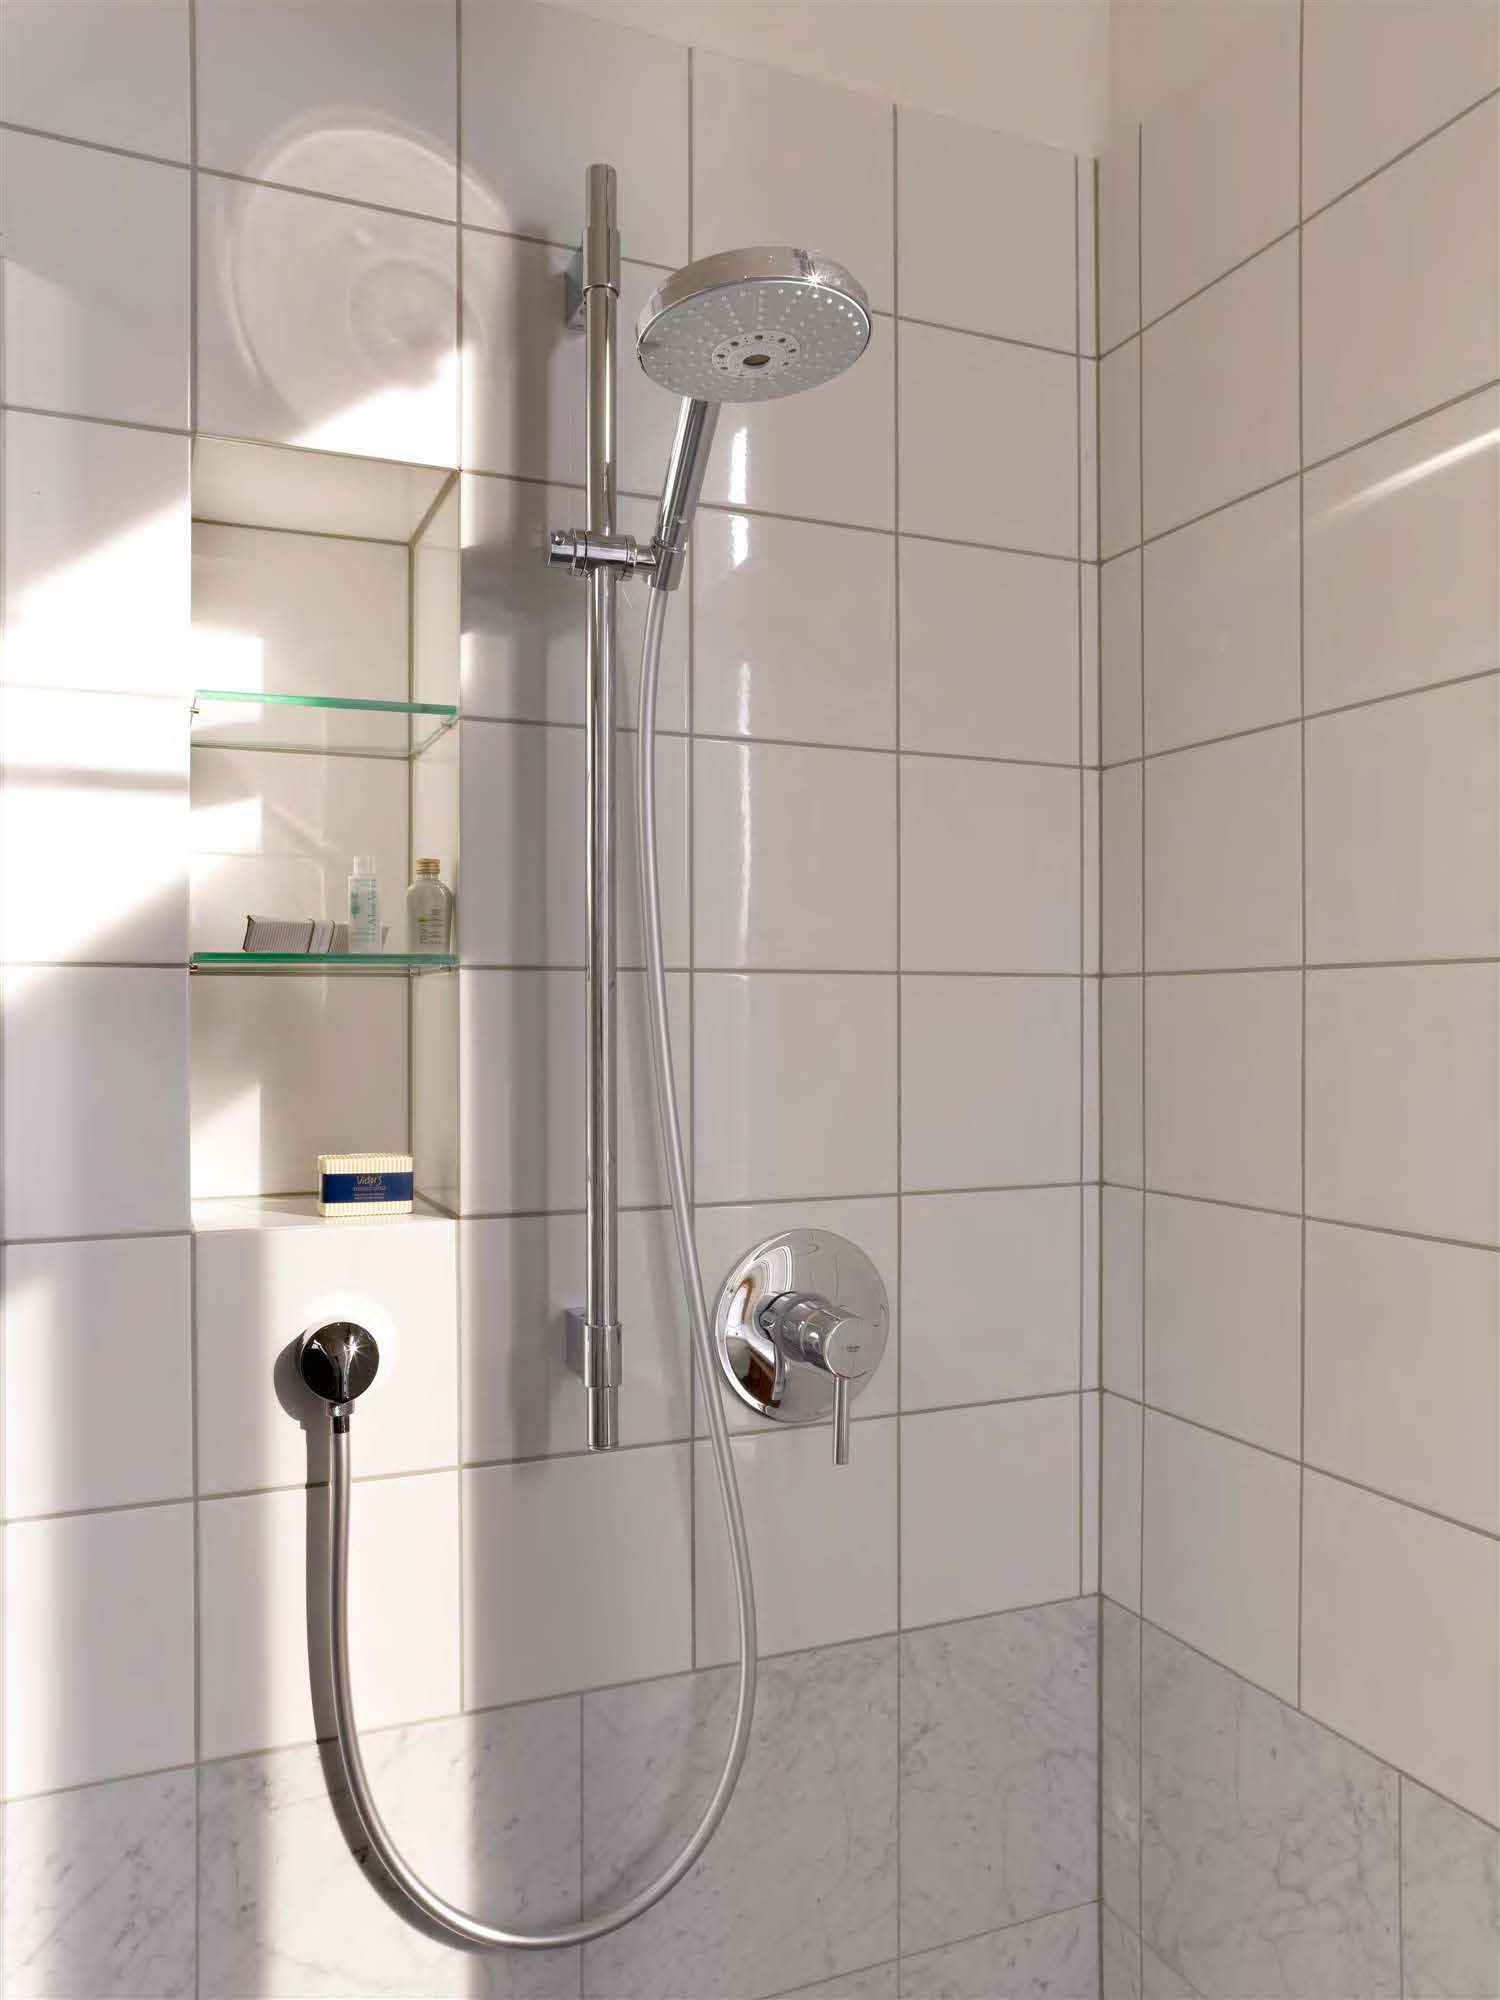 Accessible Toilet Room - Shower Fixture